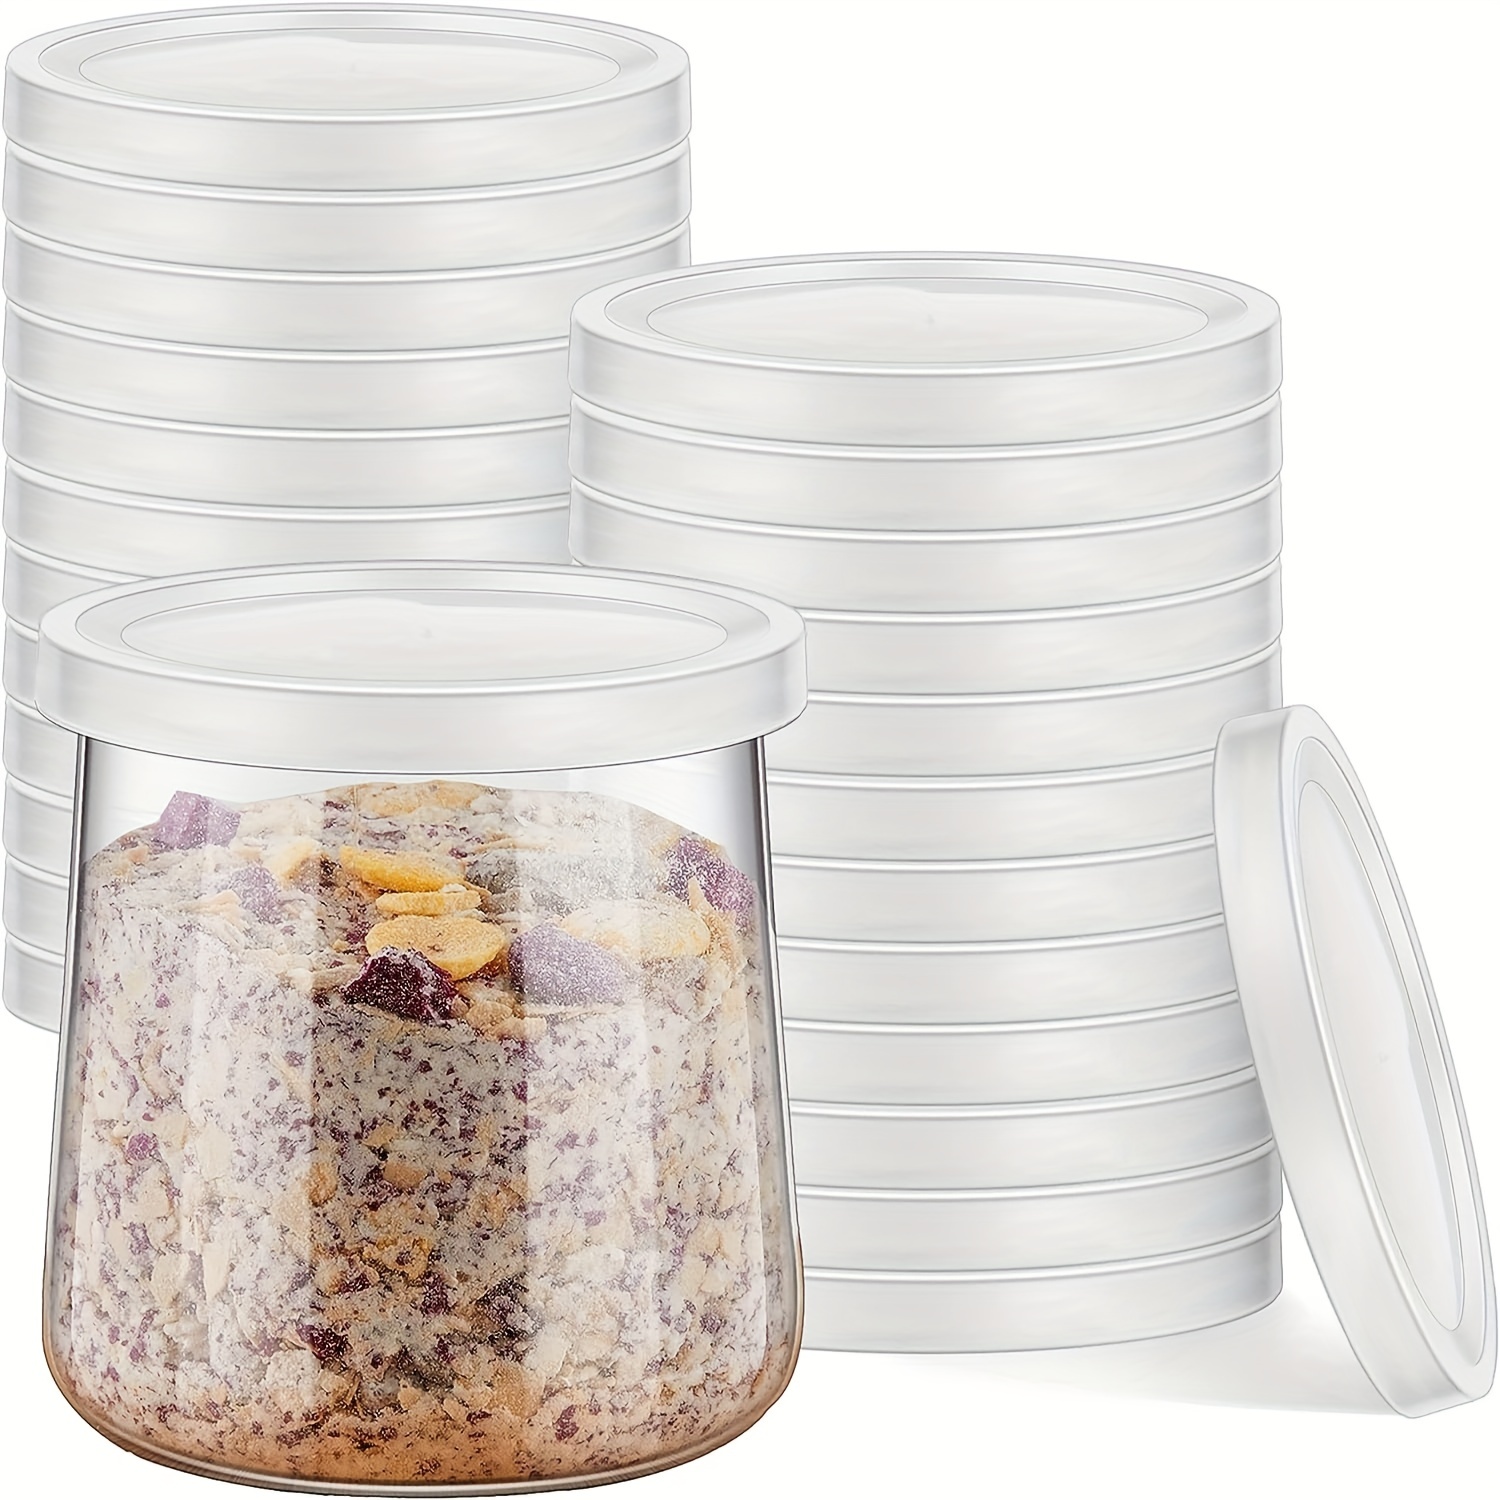 Oui Yogurt Jar Lids, Yogurt Container Lids, Clear Plastic Blue Oui Lids For  Cookie Coffee Supplies, Glass Jars Containers, Kitchen Supplies - Temu